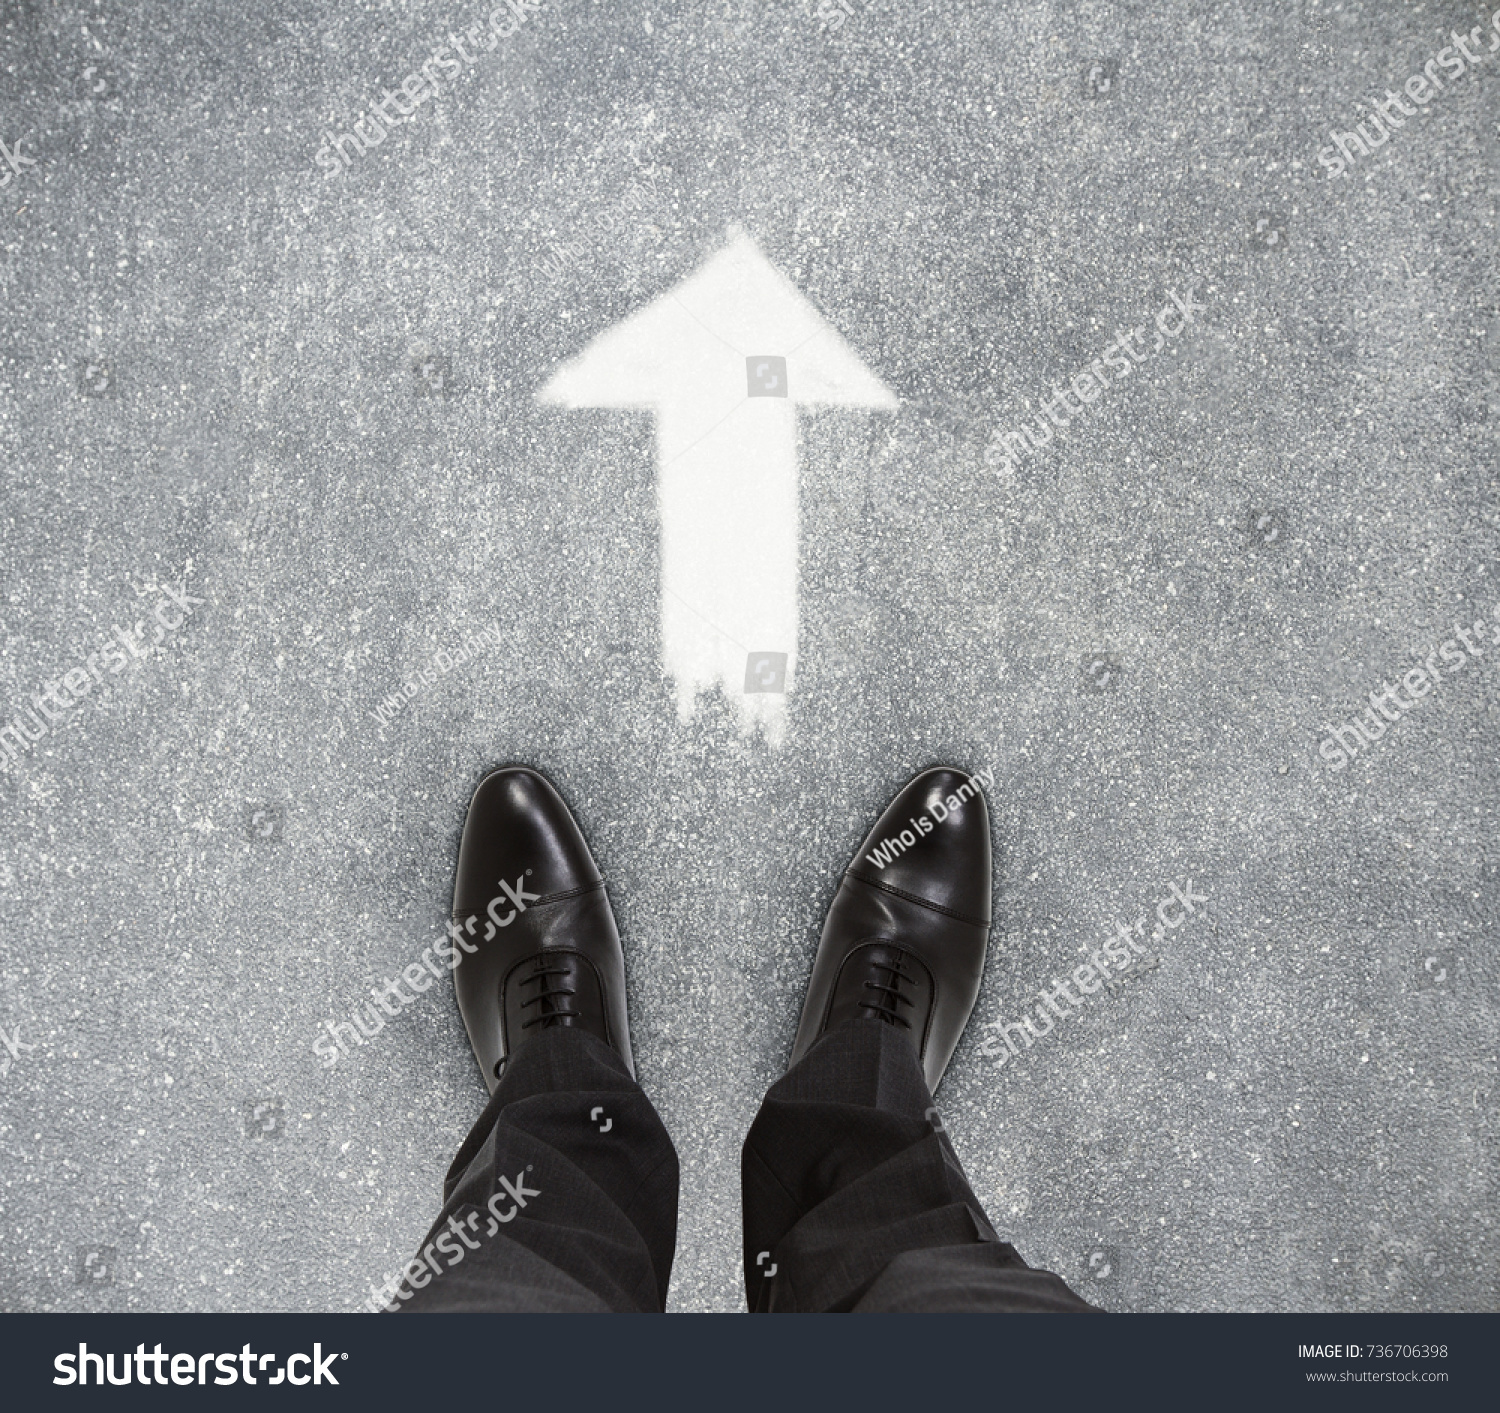 2,189 Arrow foot path Images, Stock Photos & Vectors | Shutterstock